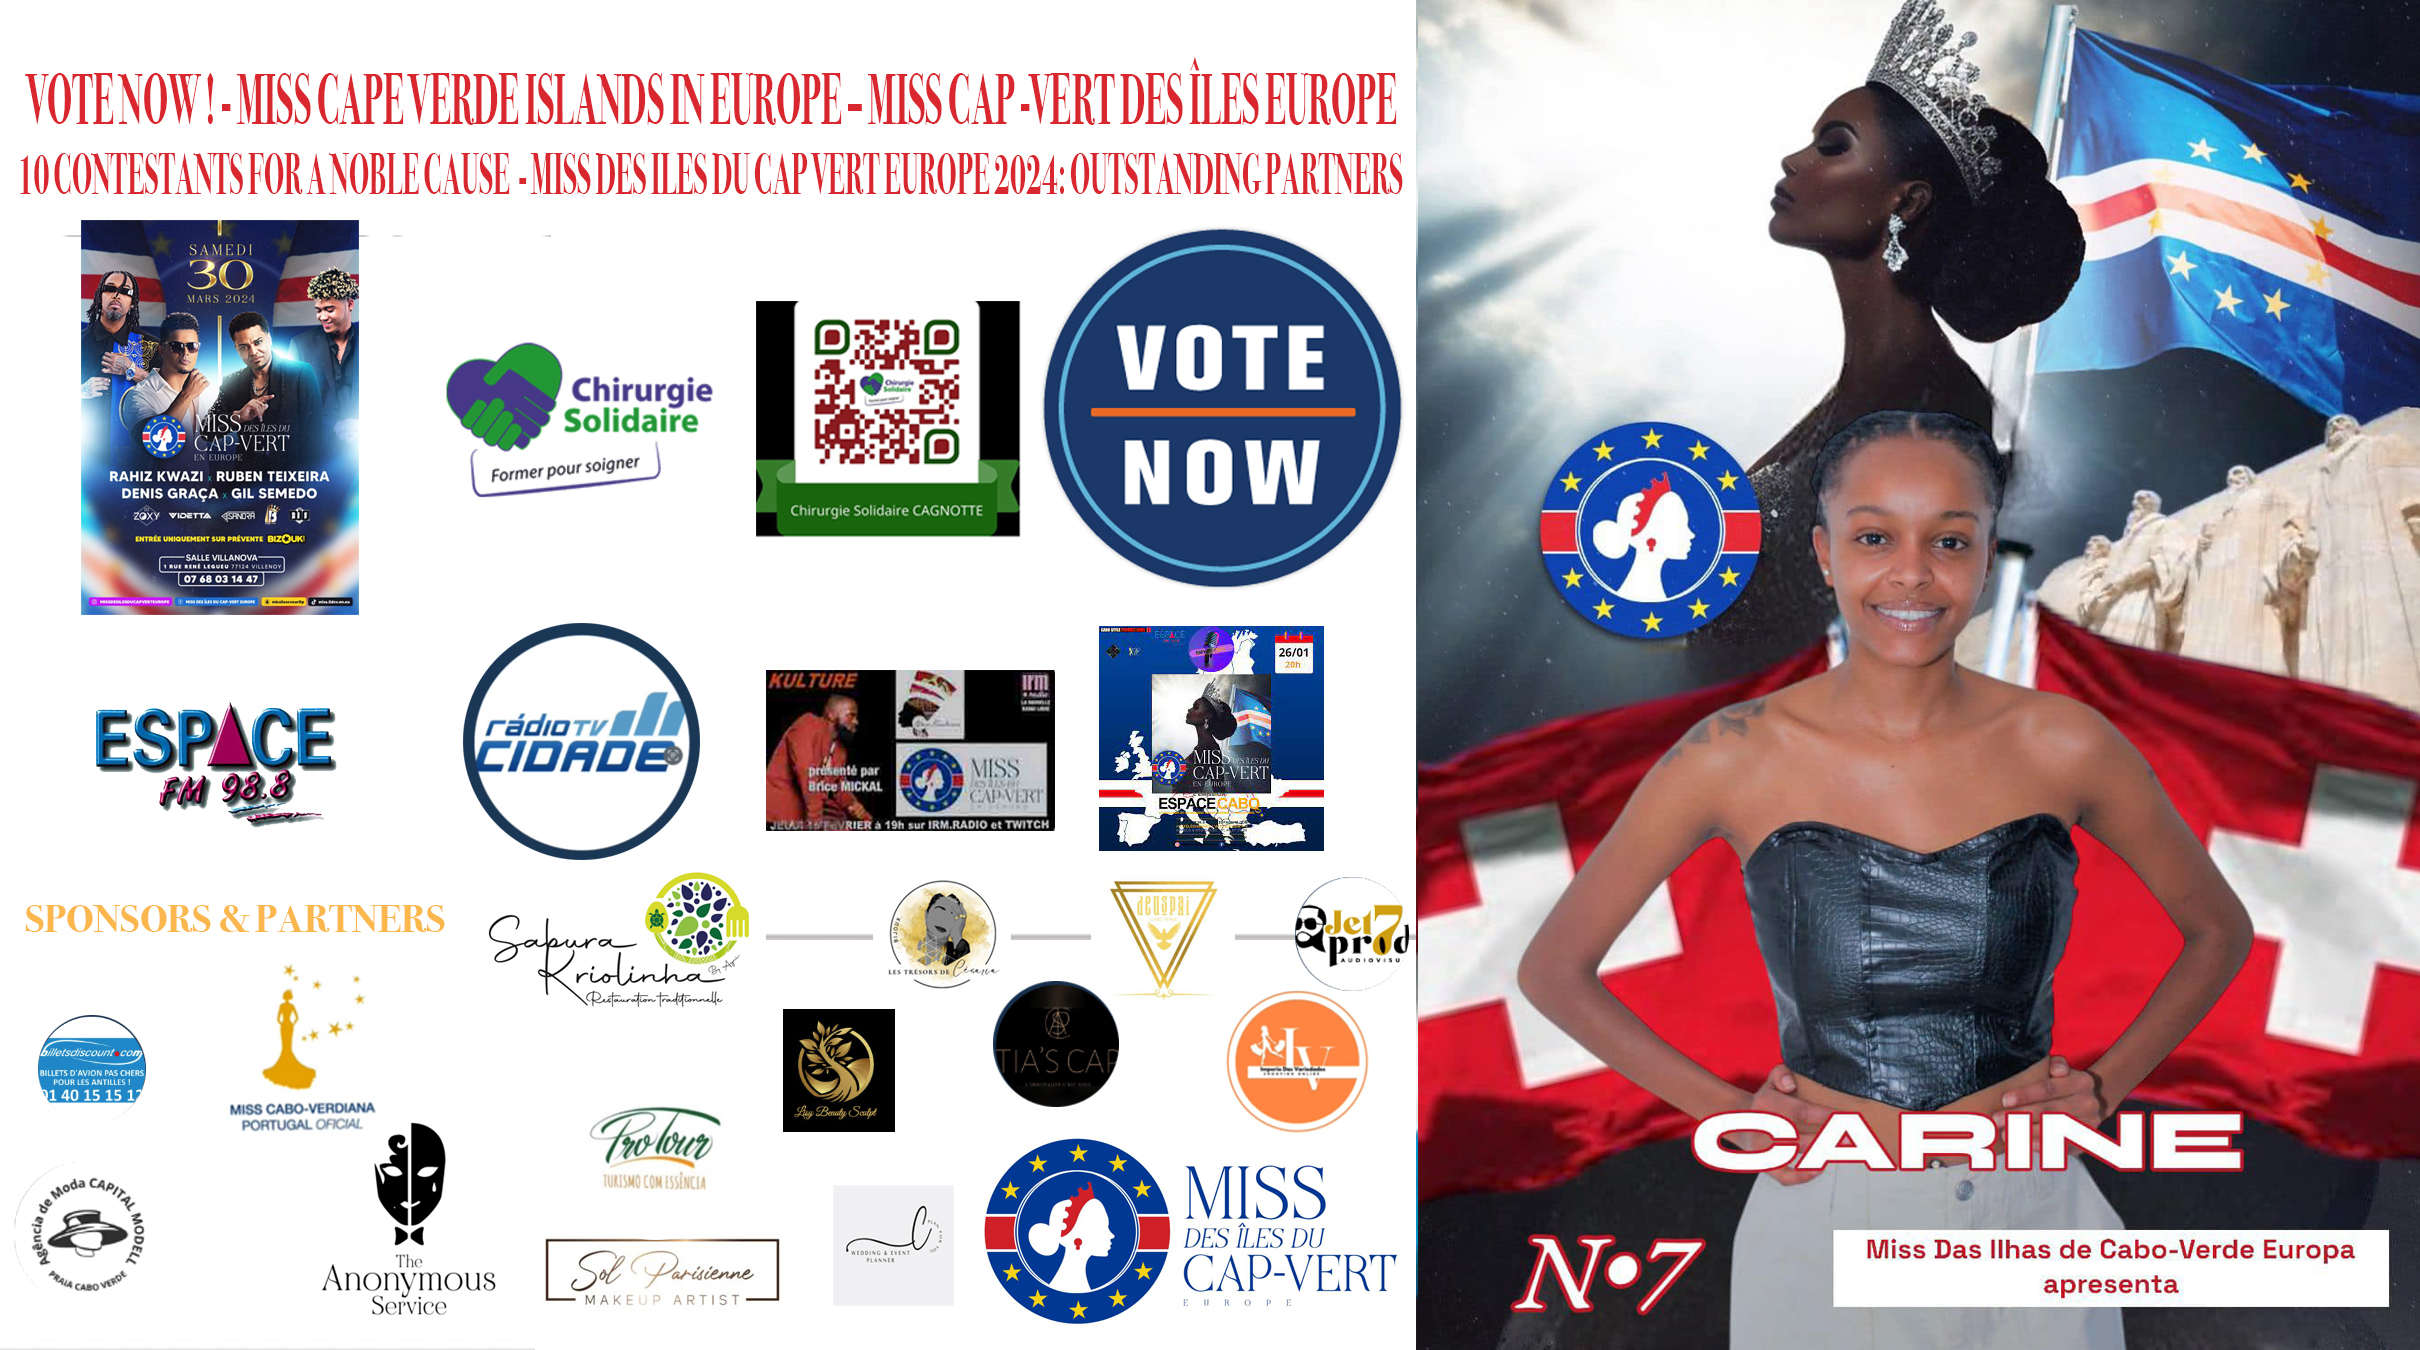 AFRICA-VOGUE-COVER-MISS-DES-ÎLES-DU-CAP-VERT-EUROPE-VOTE-NOW-Contestant-Number-7-Miss-CARINE-Will-represent-Switzerland-DN-AFRICA-Media-Partner